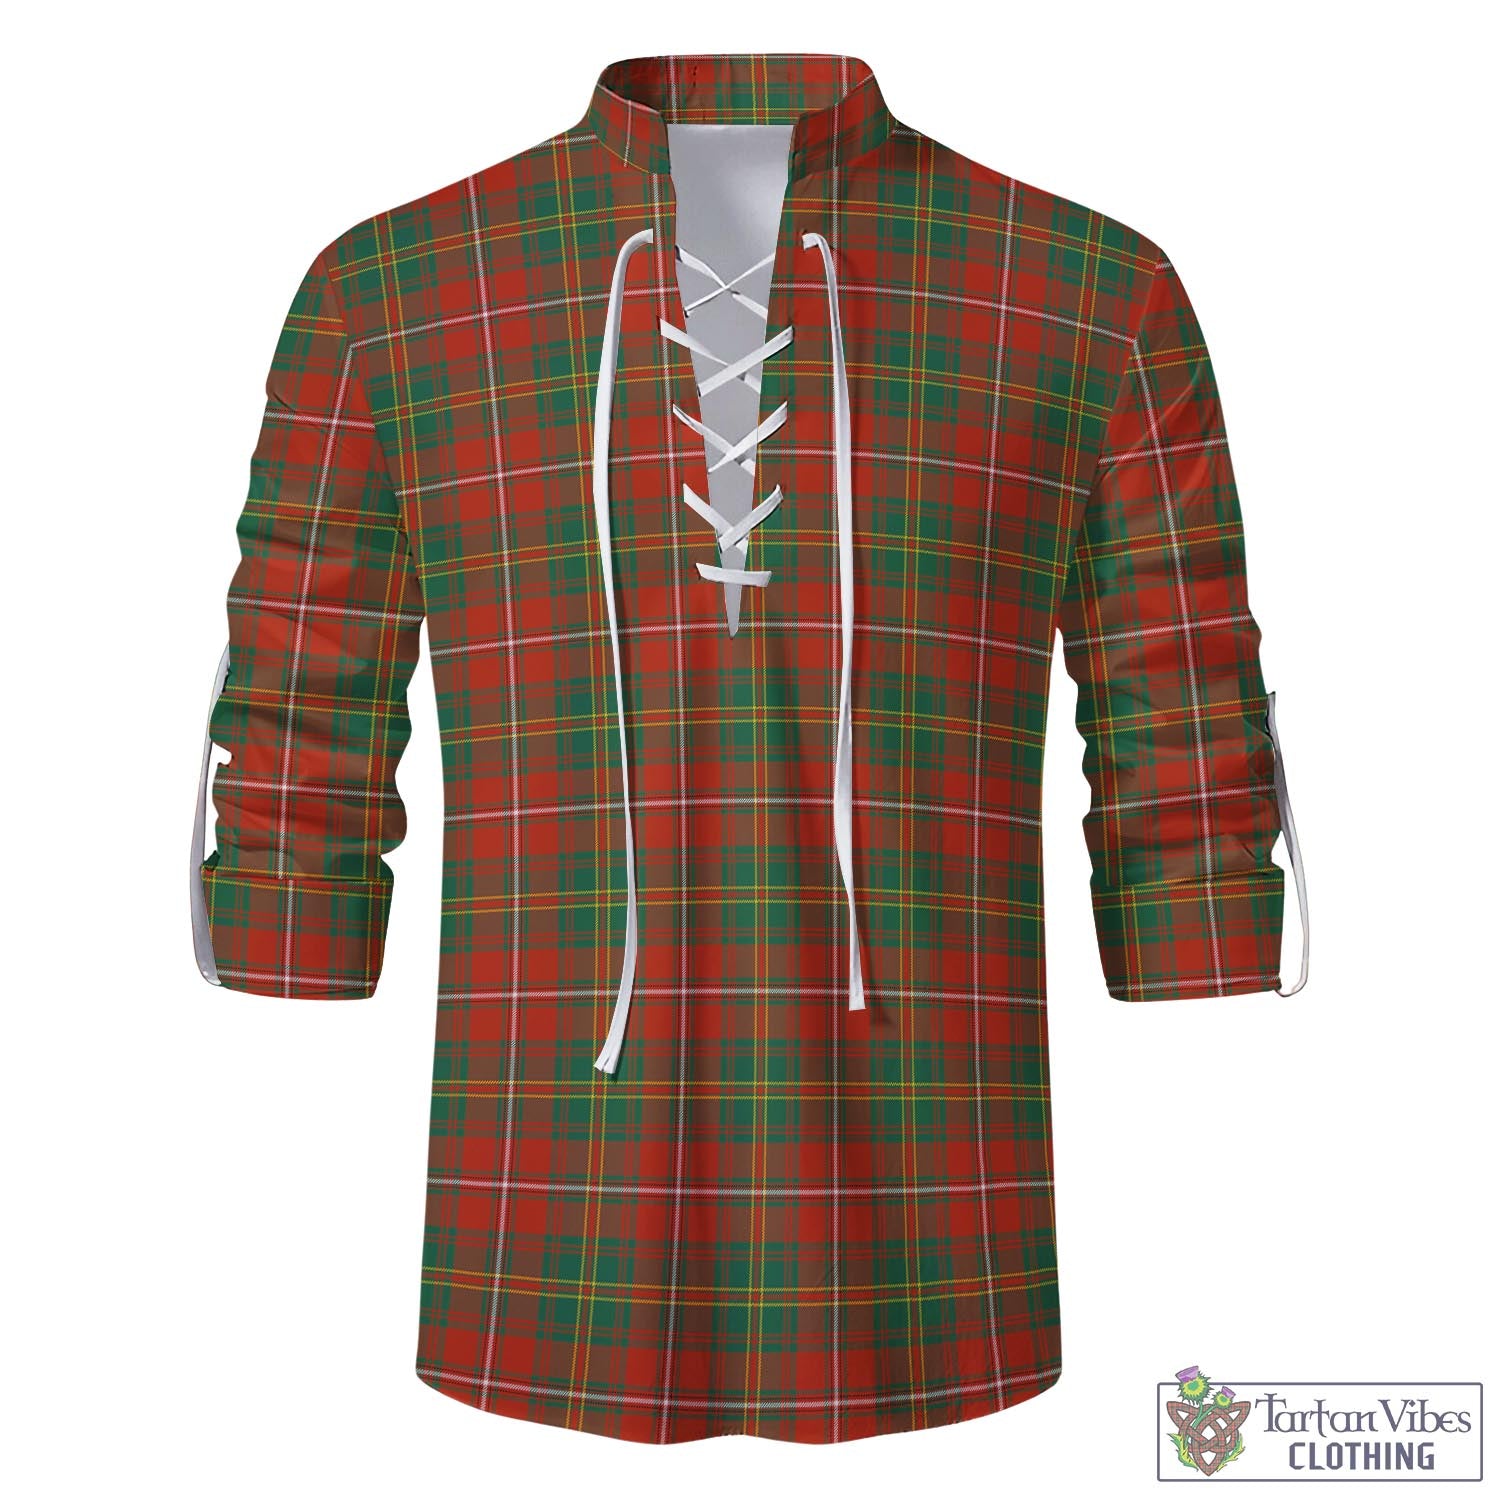 Tartan Vibes Clothing Hay Ancient Tartan Men's Scottish Traditional Jacobite Ghillie Kilt Shirt